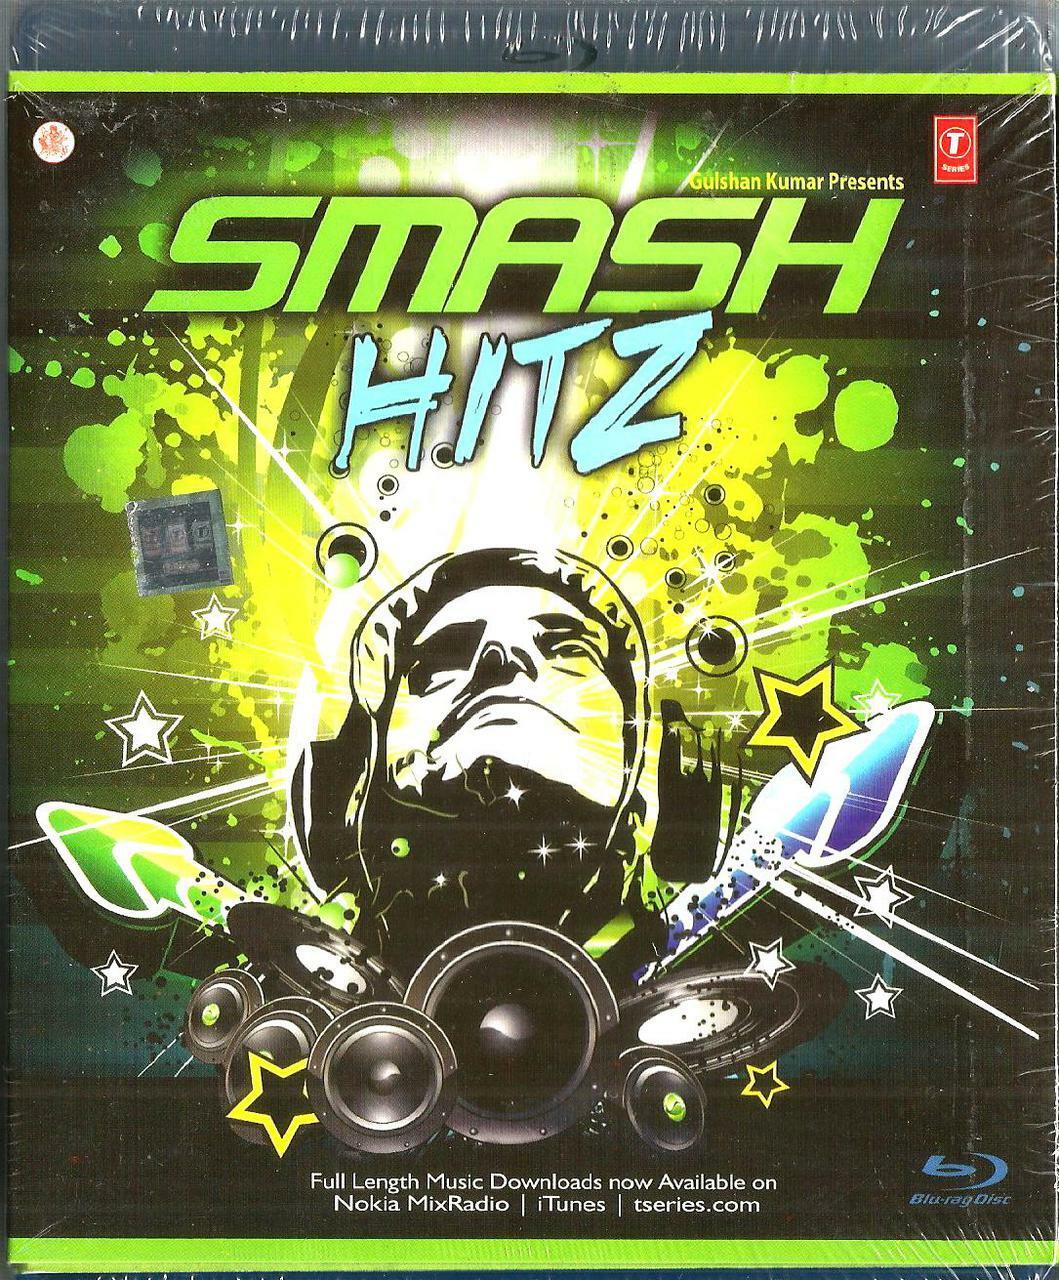 Thumbs up Smash Hits (Video Songs)